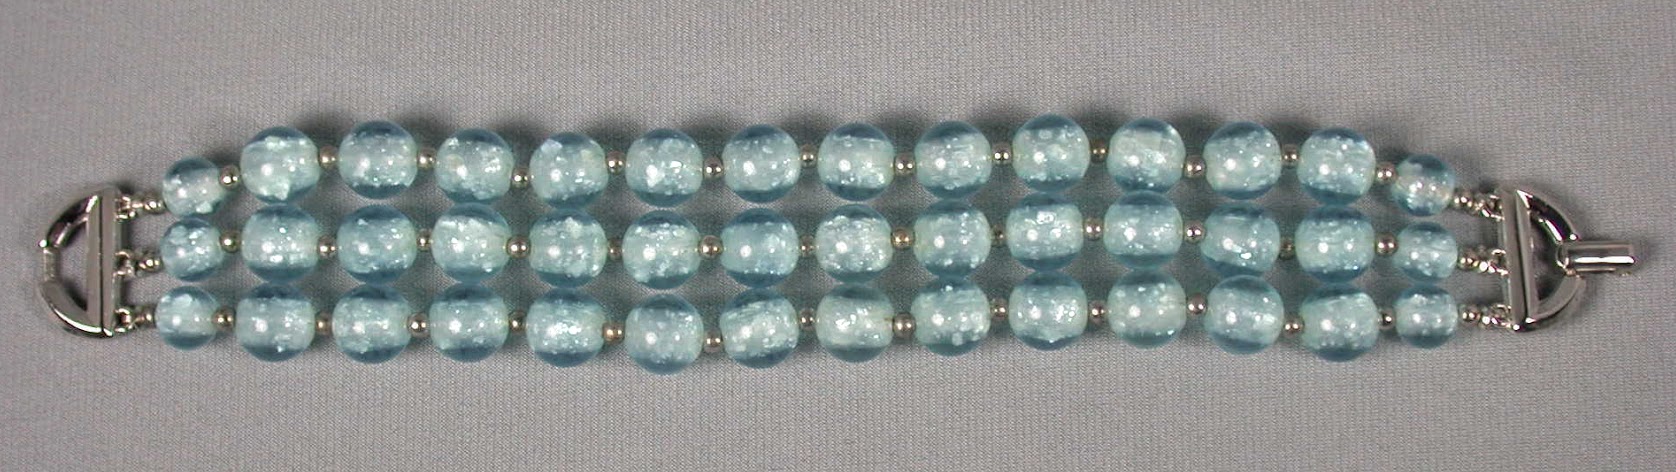 Trifari Blue Iridescent Bead Bracelet